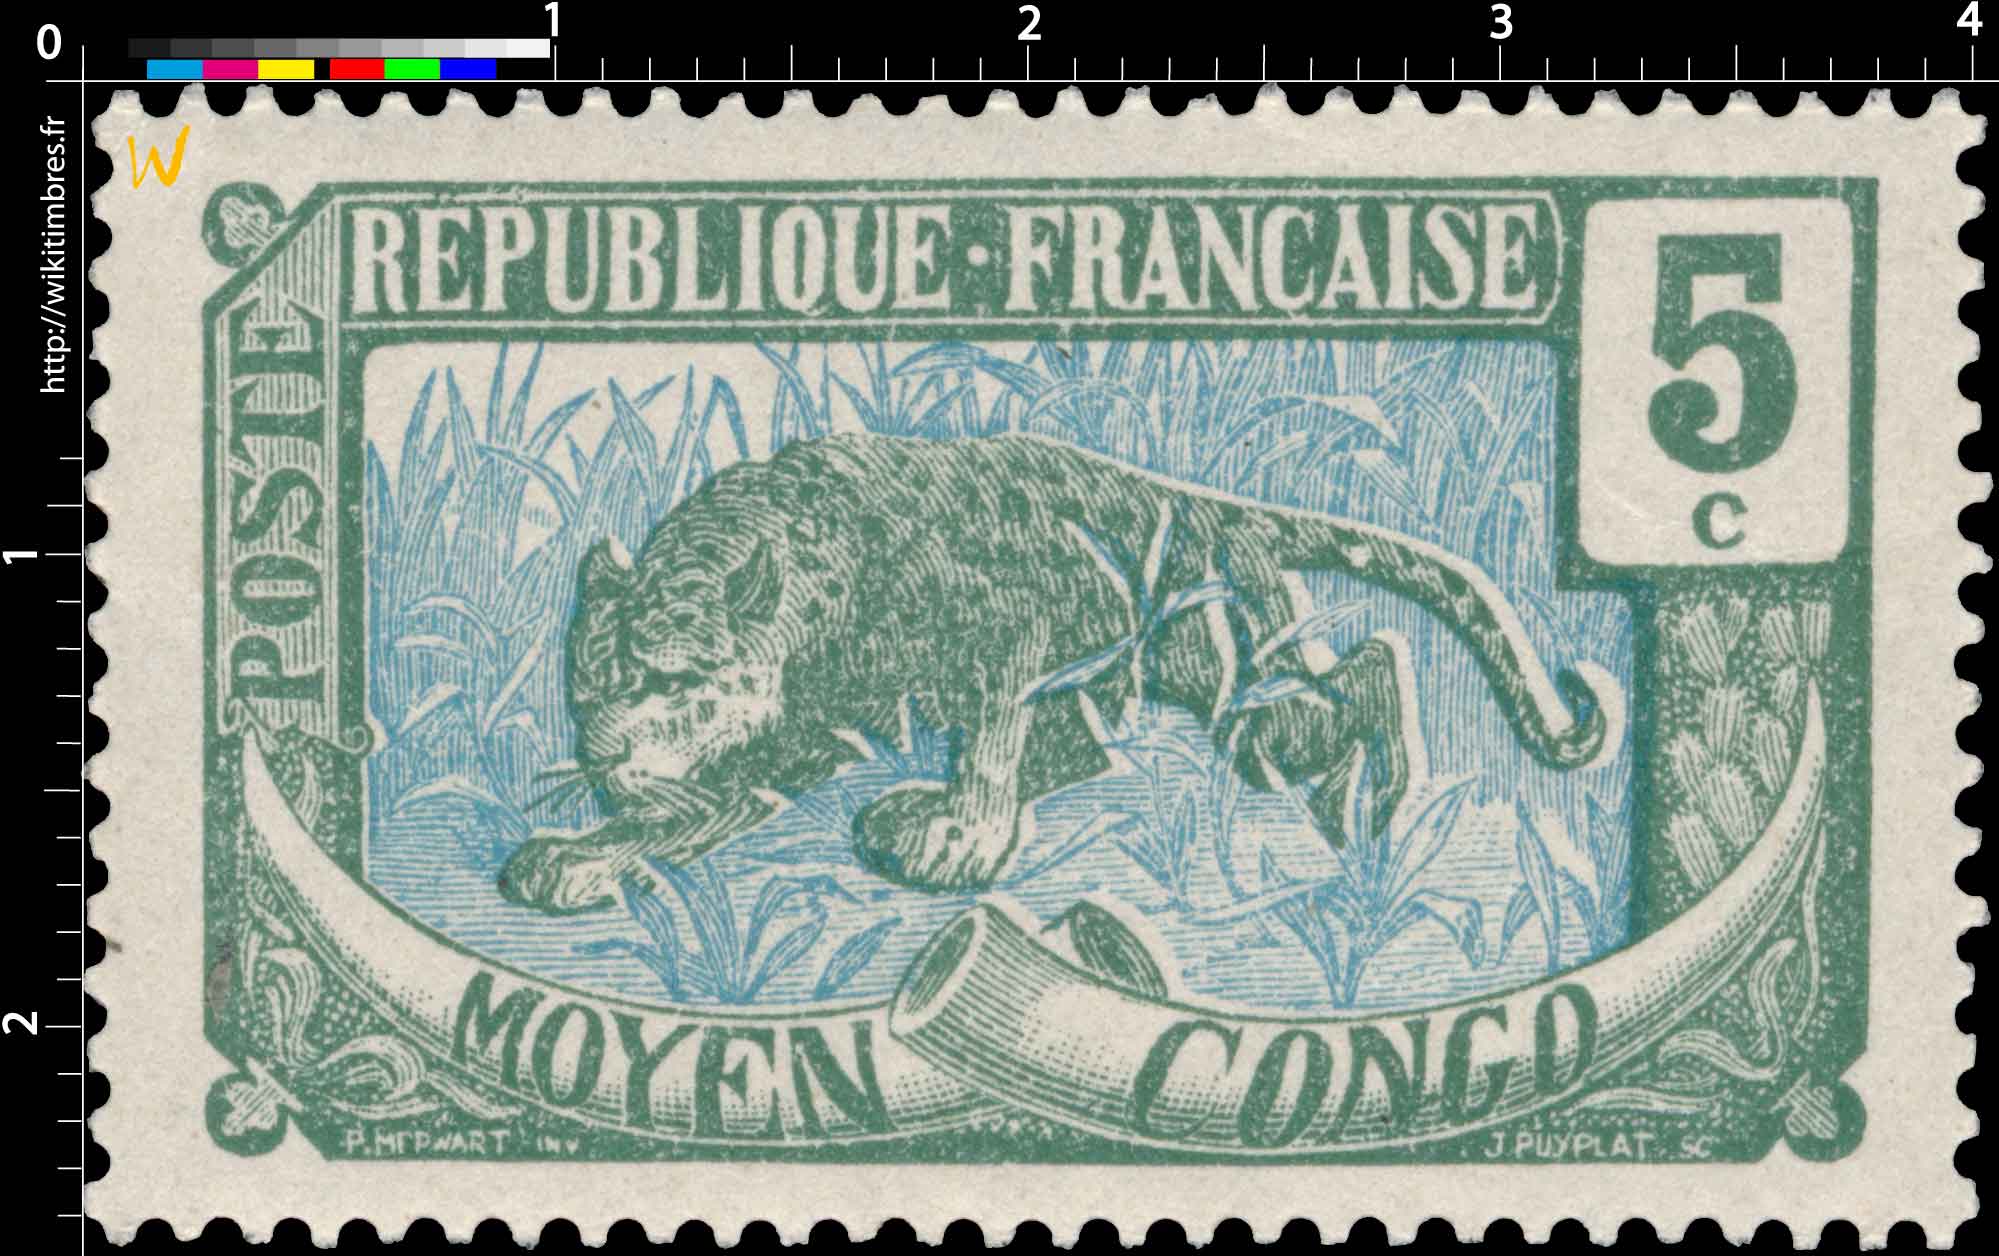 Congo - Panthère